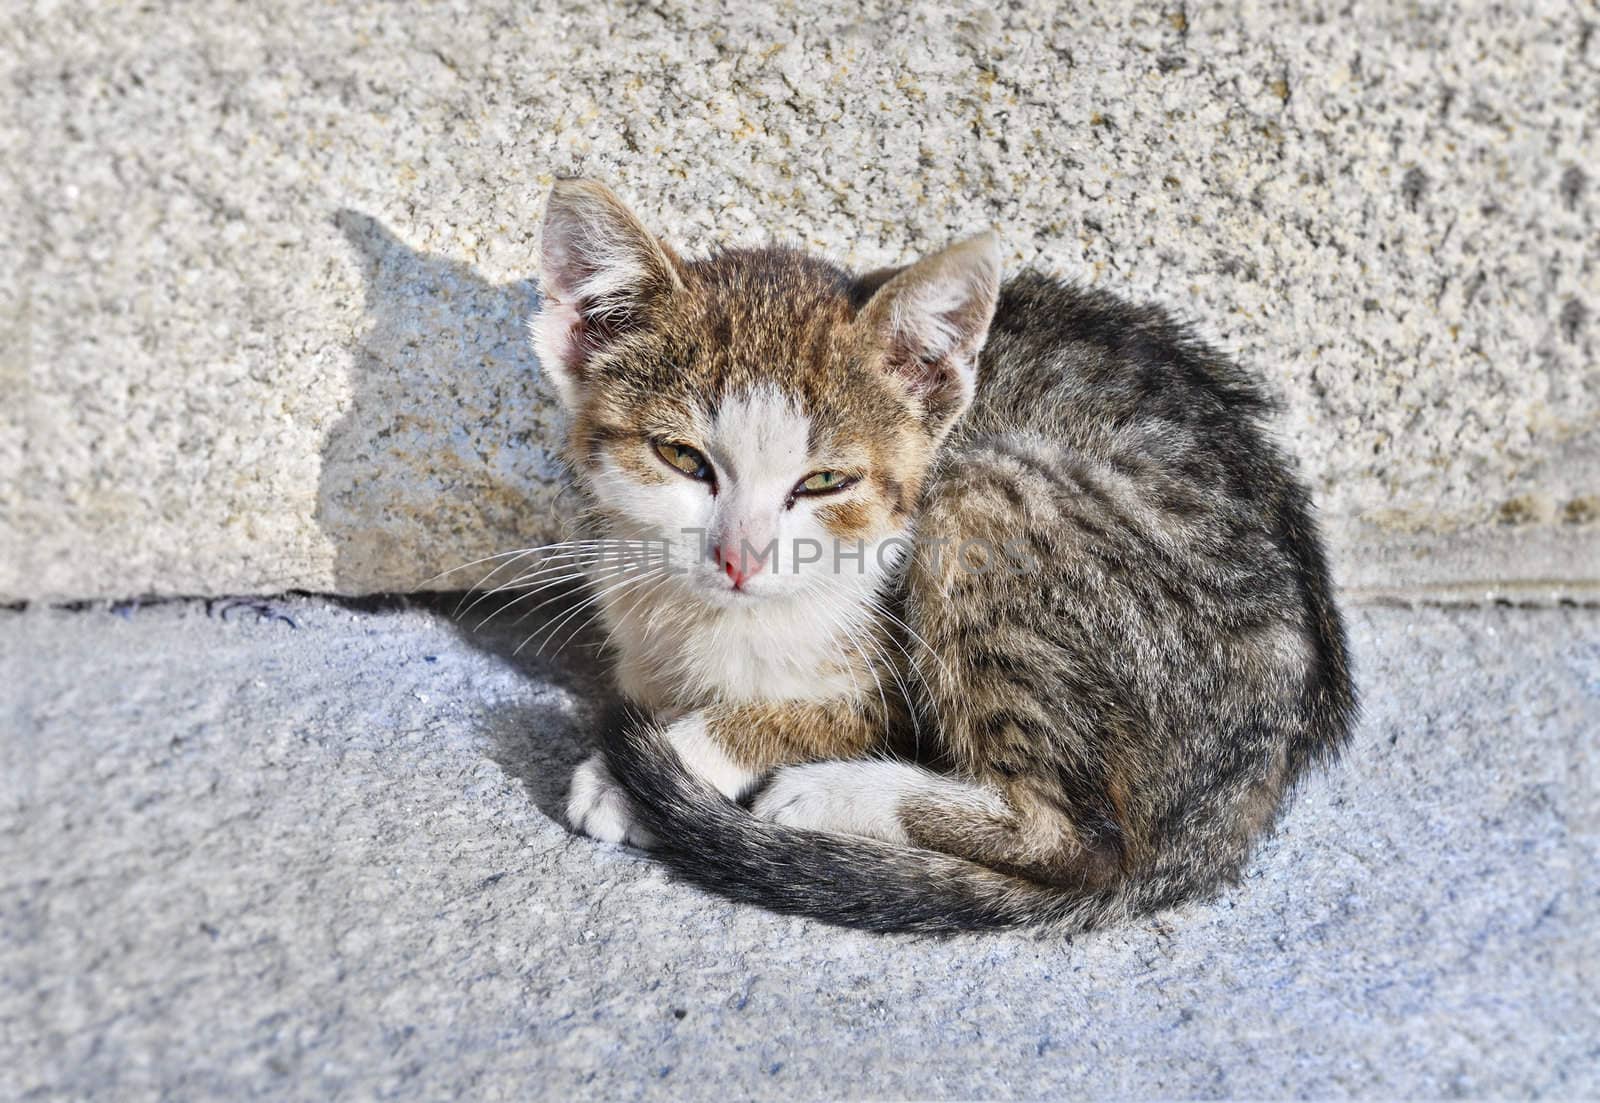 Small, sad, abandoned kitten sitting on the street.